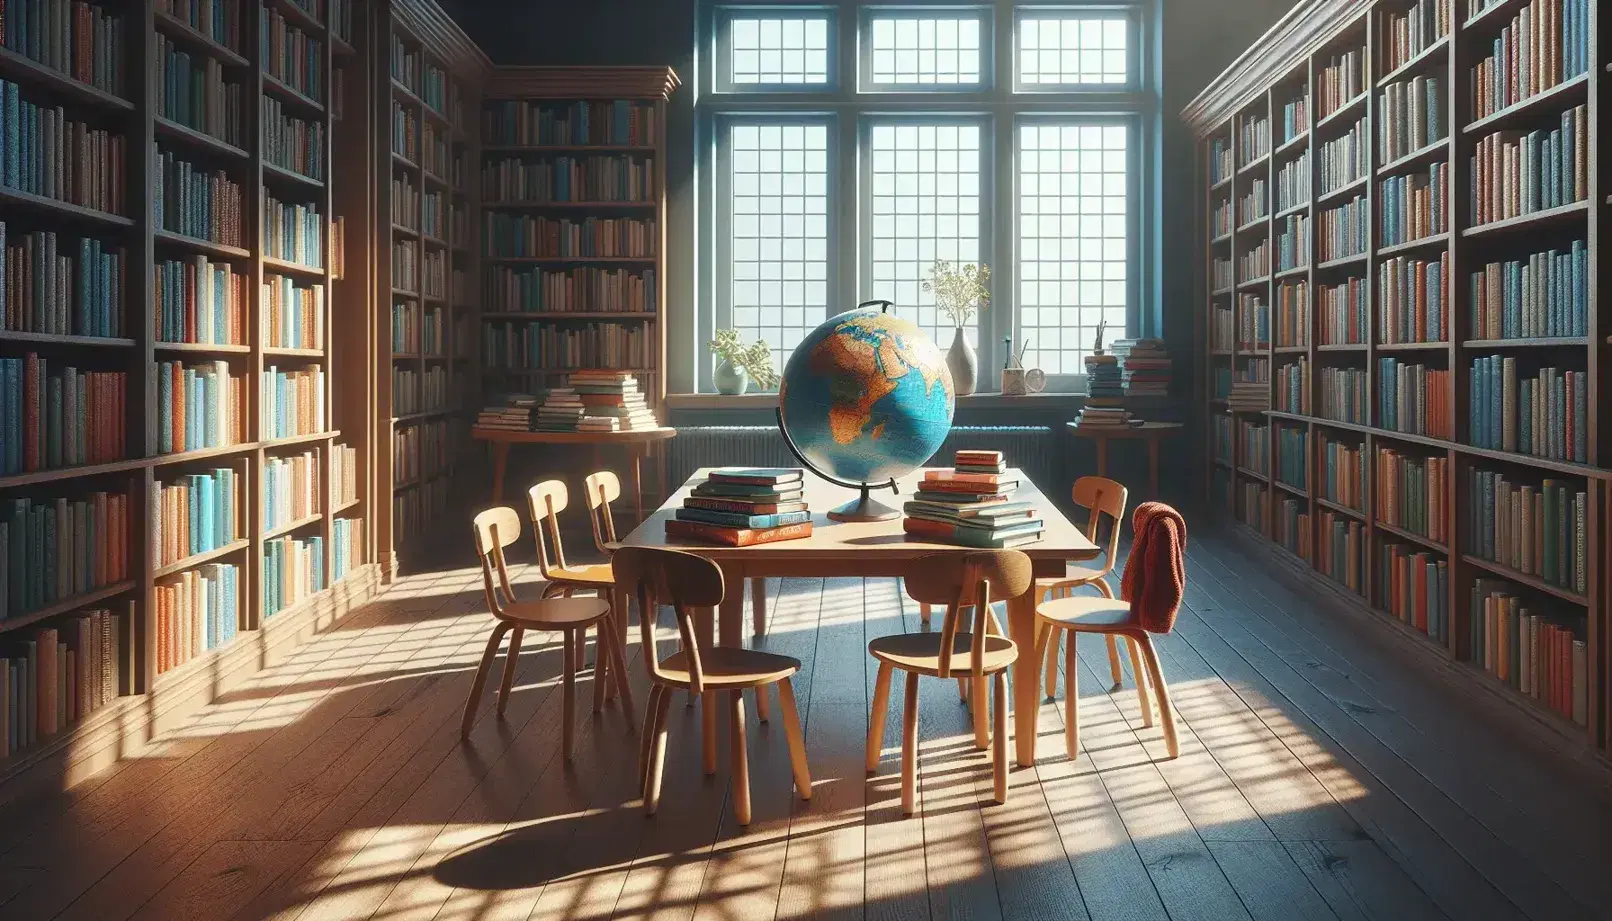 Biblioteca escolar iluminada con estantes de madera oscura llenos de libros, mesa con libros y un globo terráqueo, ventana grande al fondo.